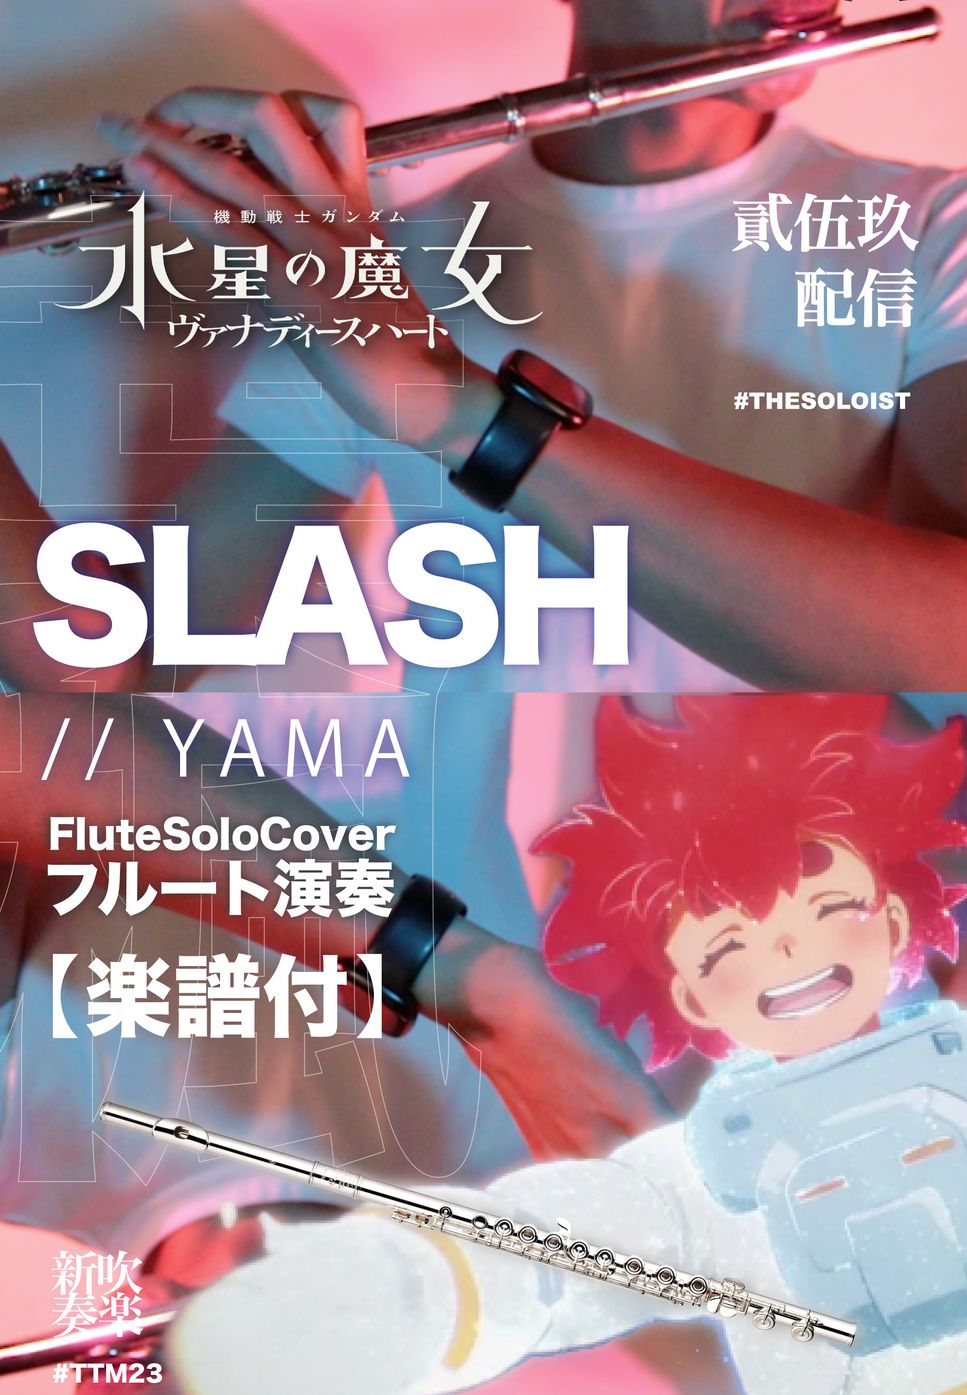 Yama - SLASH (C/ Bb/ F/ Eb Solo Sheet Music) by FungYip